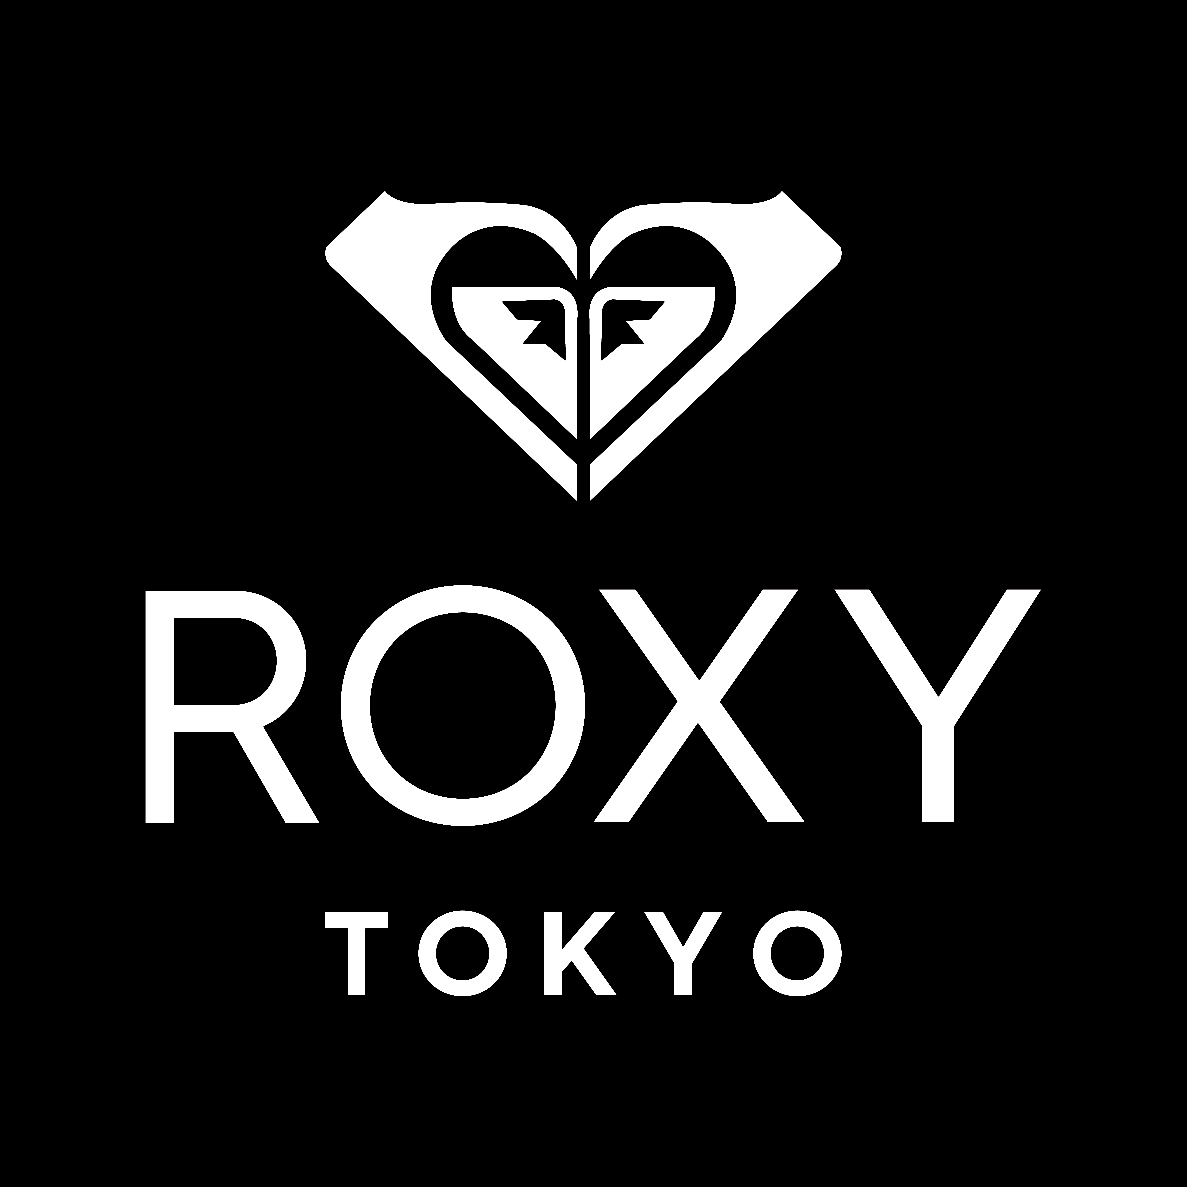 ROXY TOKYO LOGO